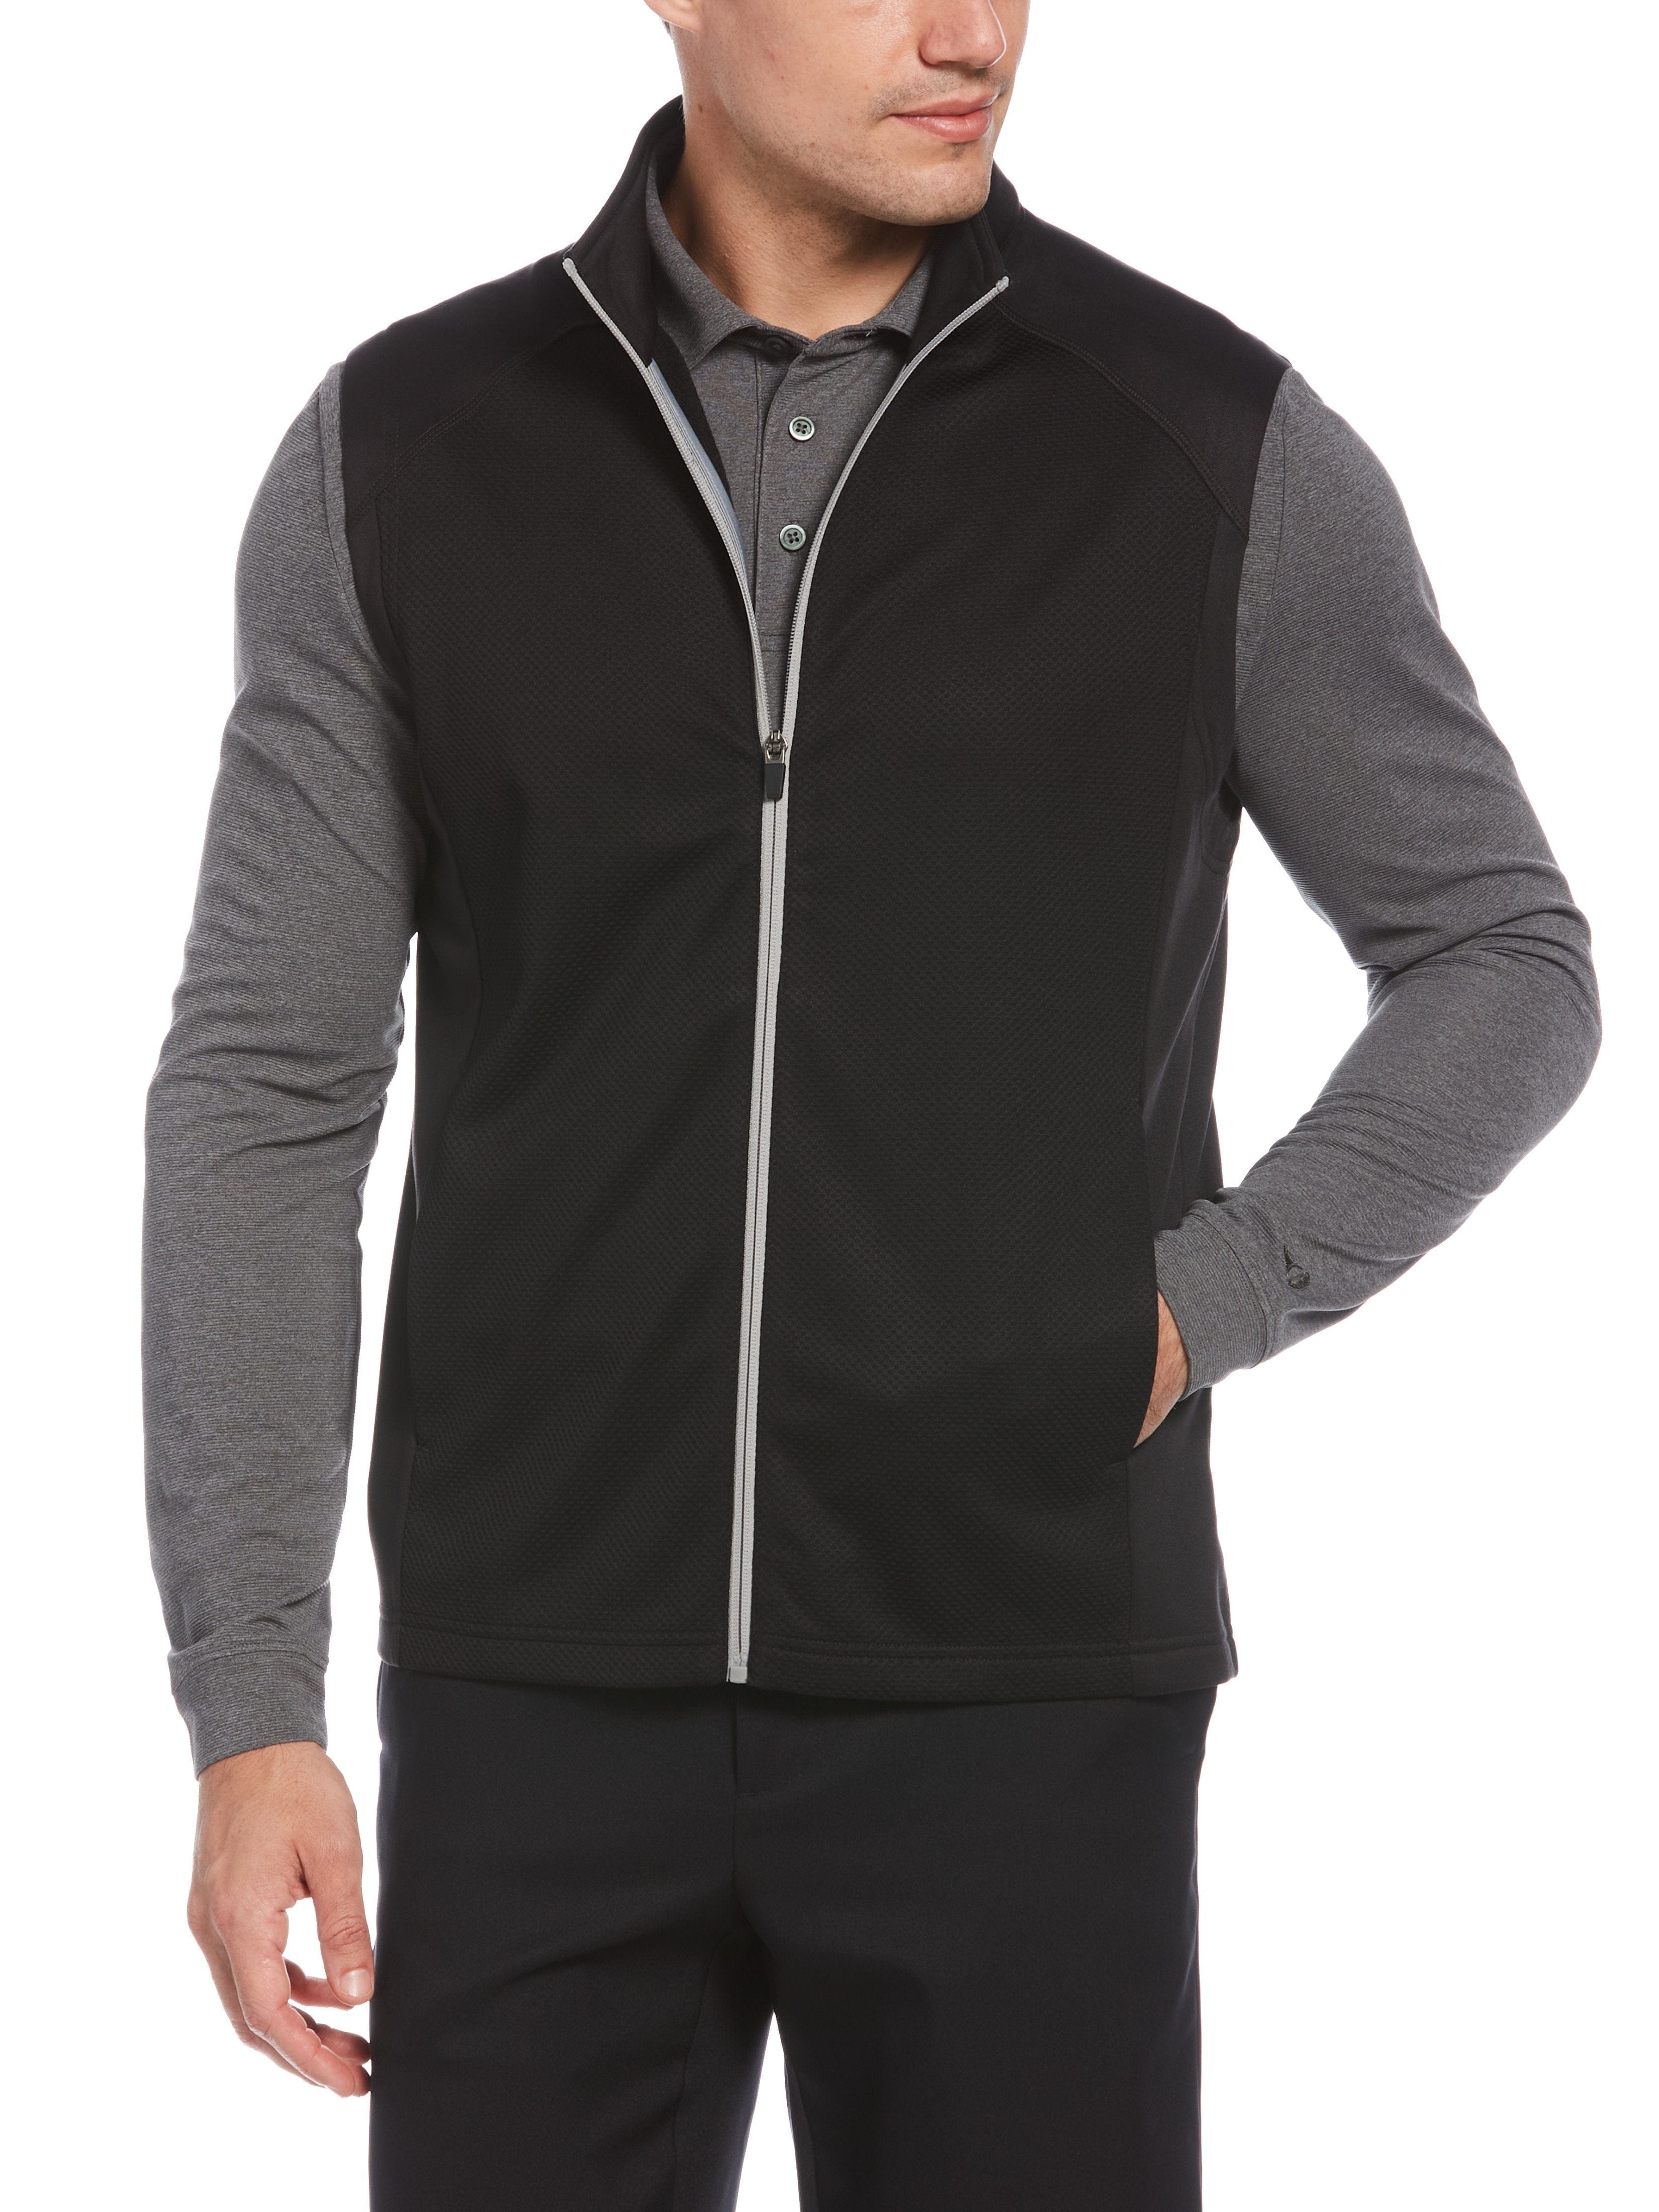 PGA TOUR Apparel Mens Mixed Texture Fleece Golf Vest Top, Size Medium, Black, 100% Polyester | Golf Apparel Shop